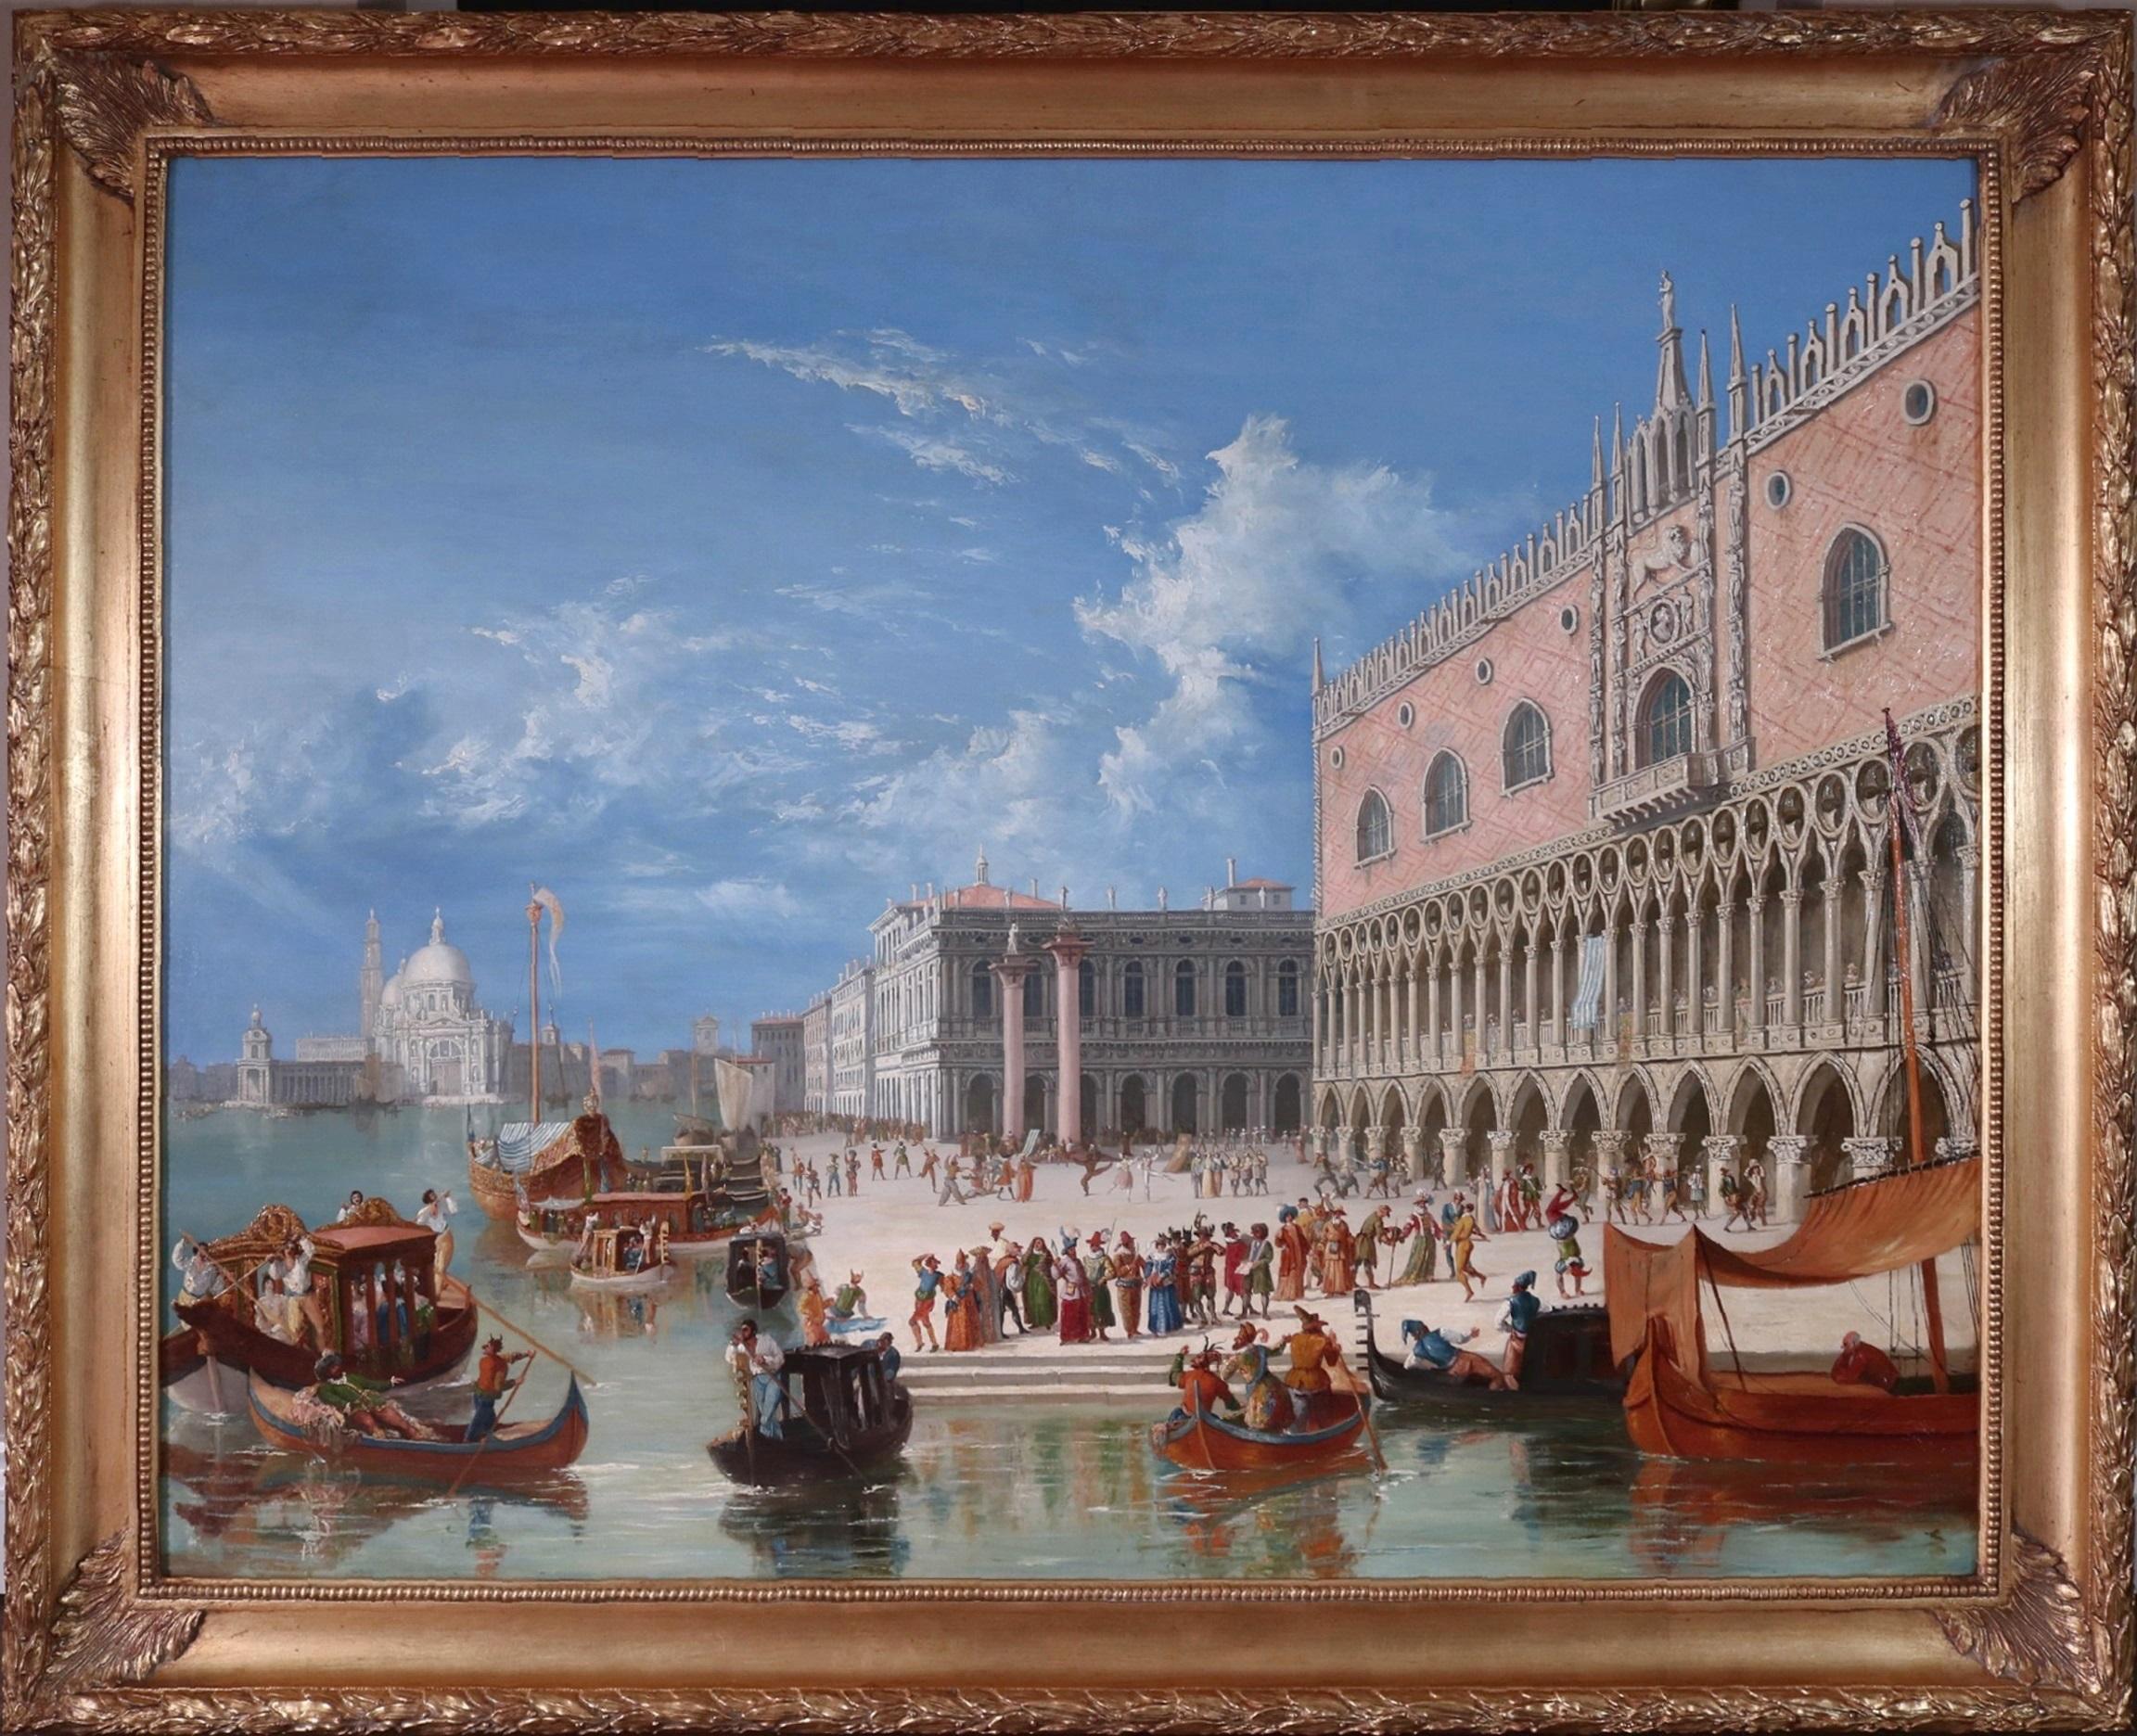 James Holland Figurative Painting – Carnevale di Venezia - Großes Ölgemälde von Canaletto aus Venedig, Italien, 19. Jahrhundert